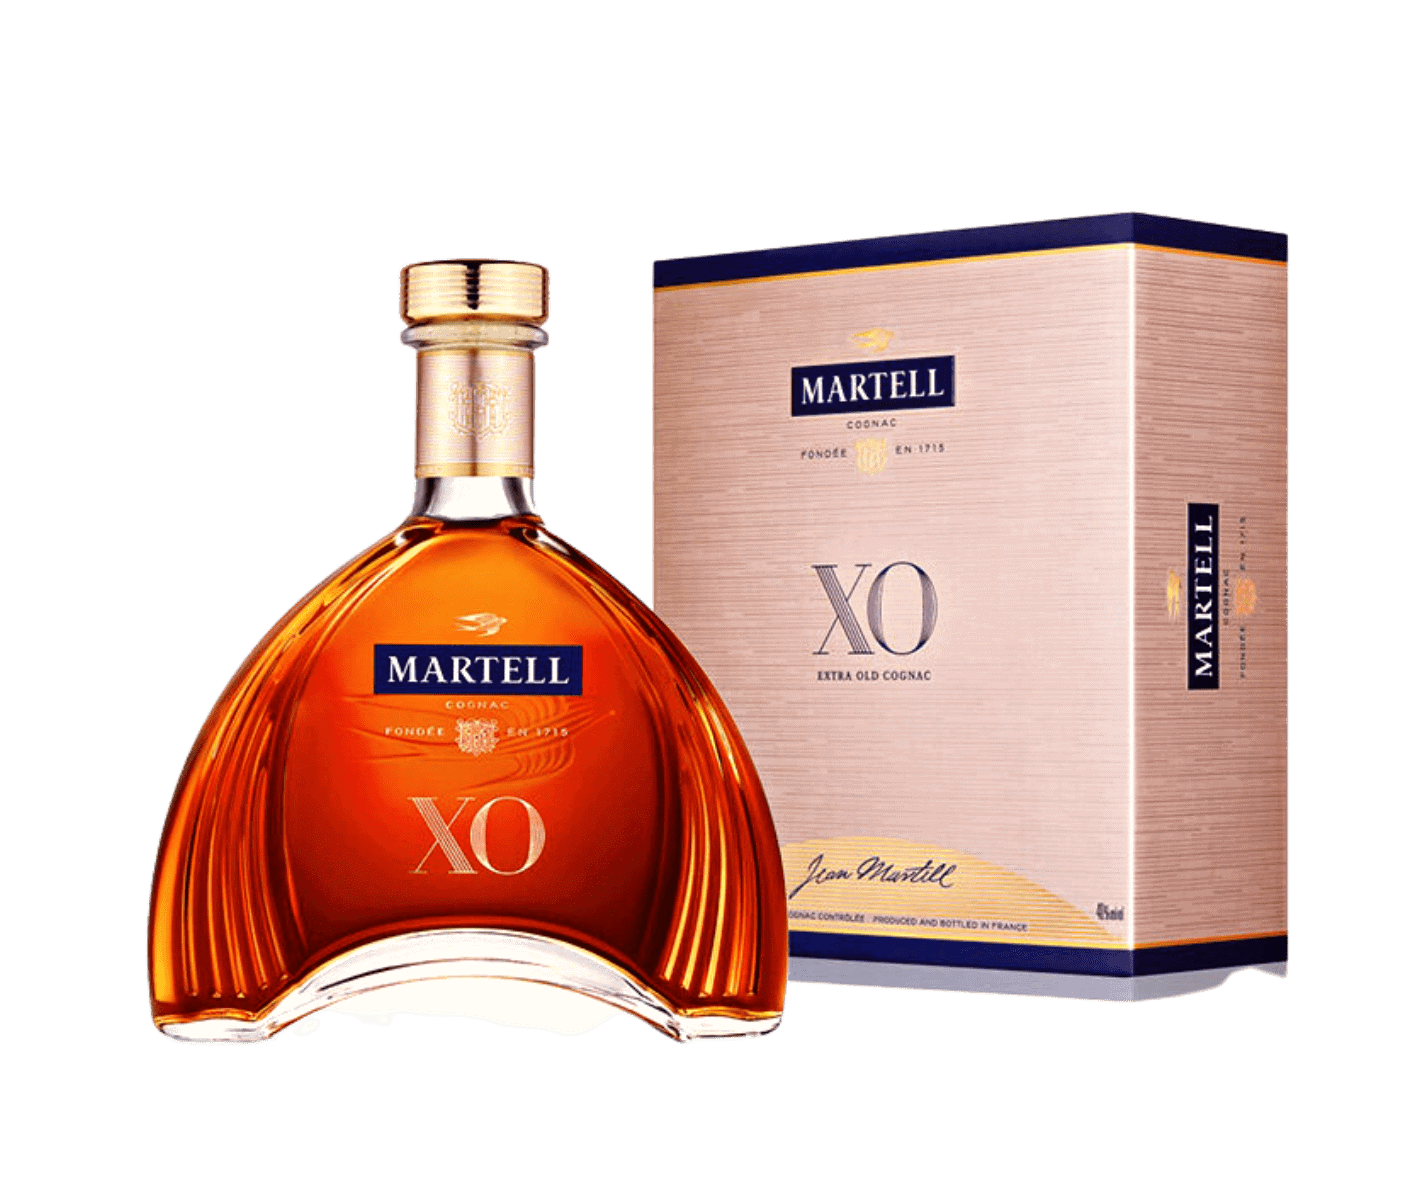 Martell XO Extra Old Cognac 40% Vol. 0,7l in Giftbox - GOLDEN RAIN